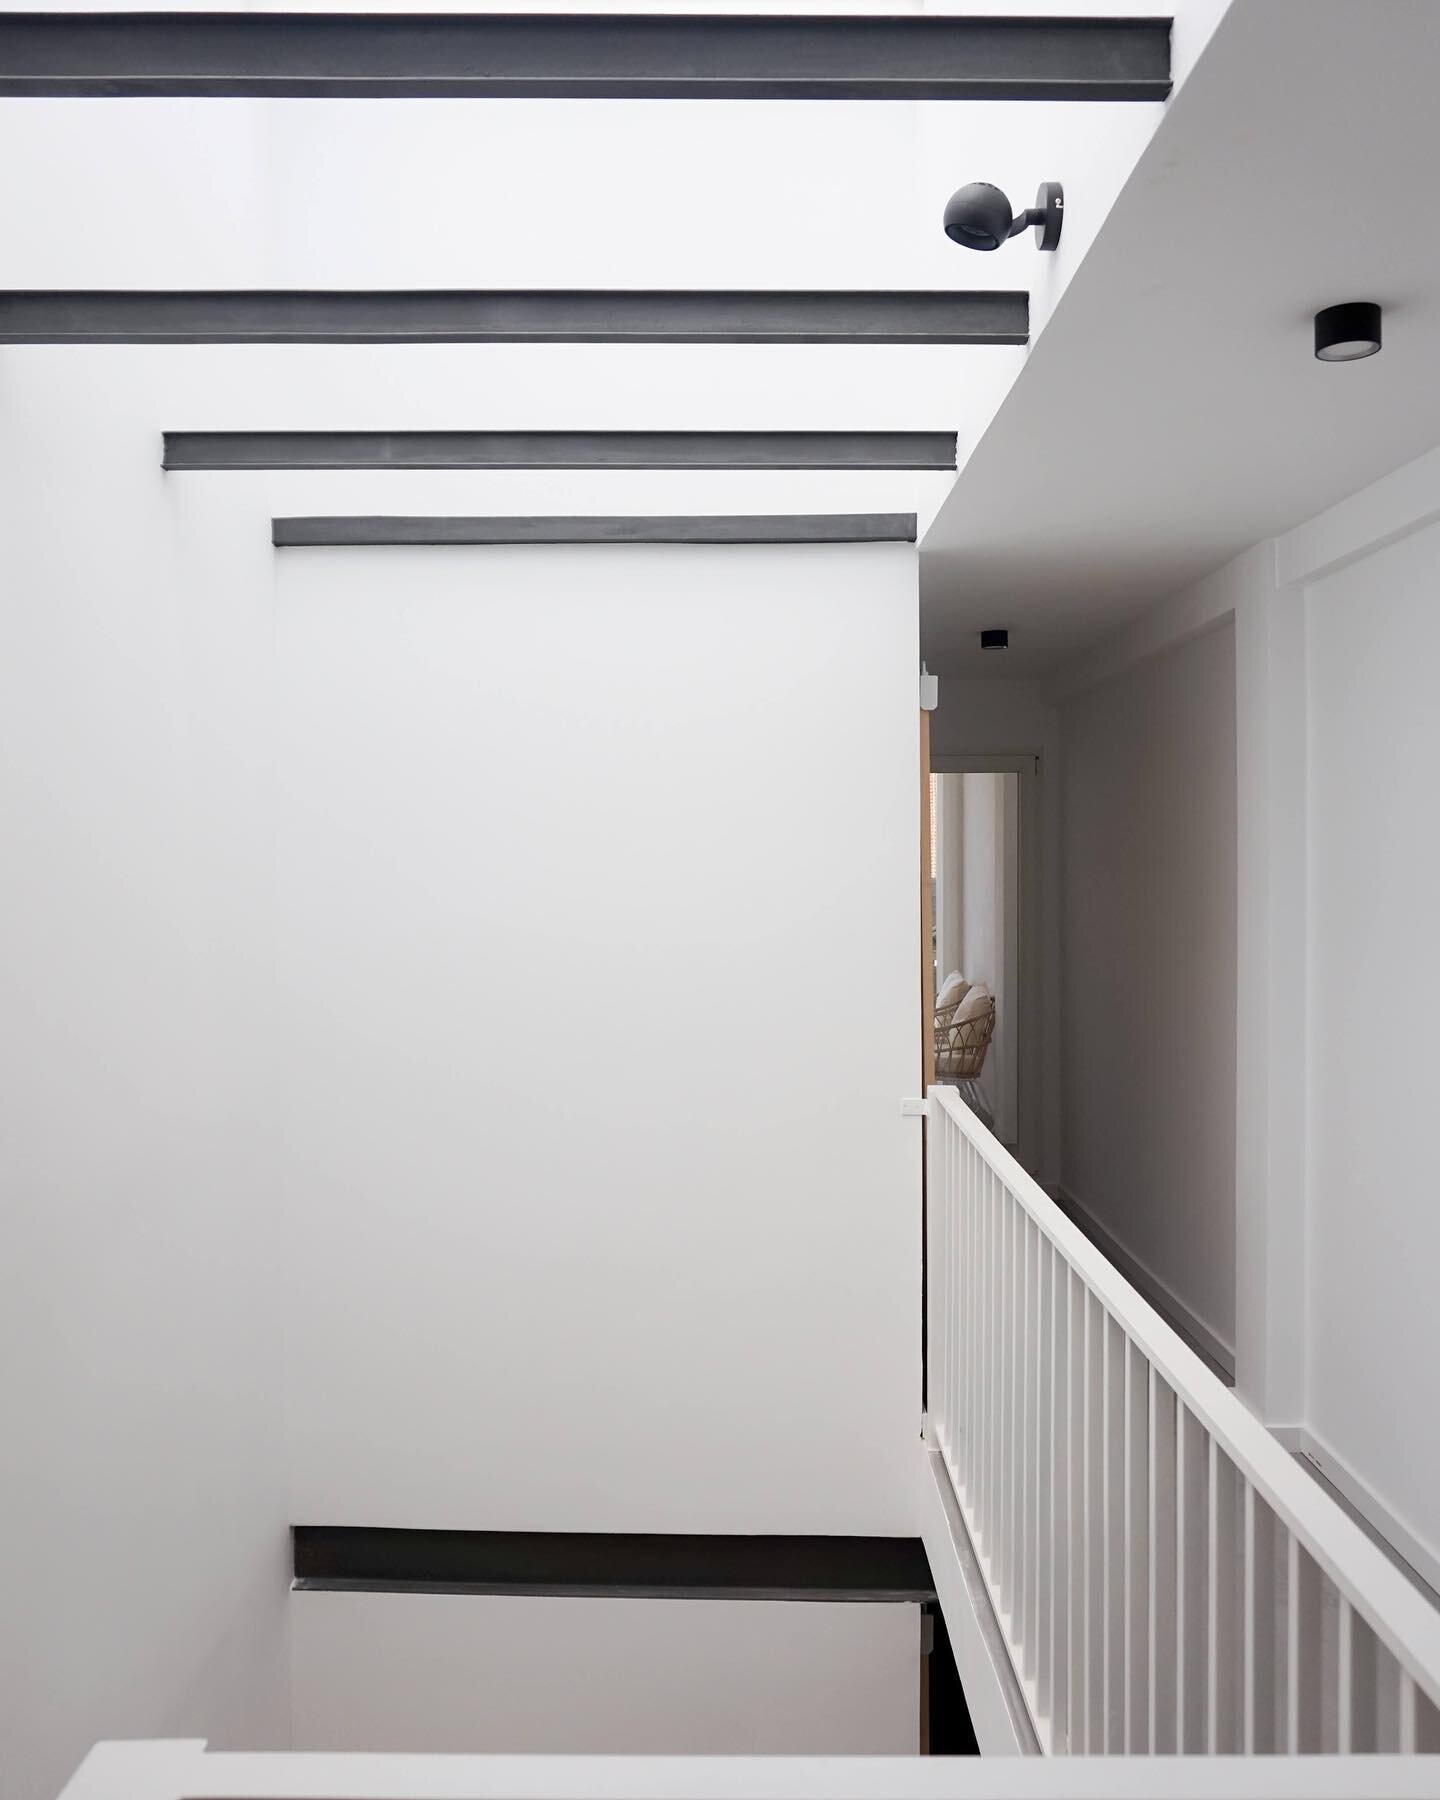 La escalera como fuente de luz.

#arquitectura #architecture #design #dise&ntilde;odeinteriores #interiorismo #interiordesign #archilovers #archdaily #escaleras #lucernarios